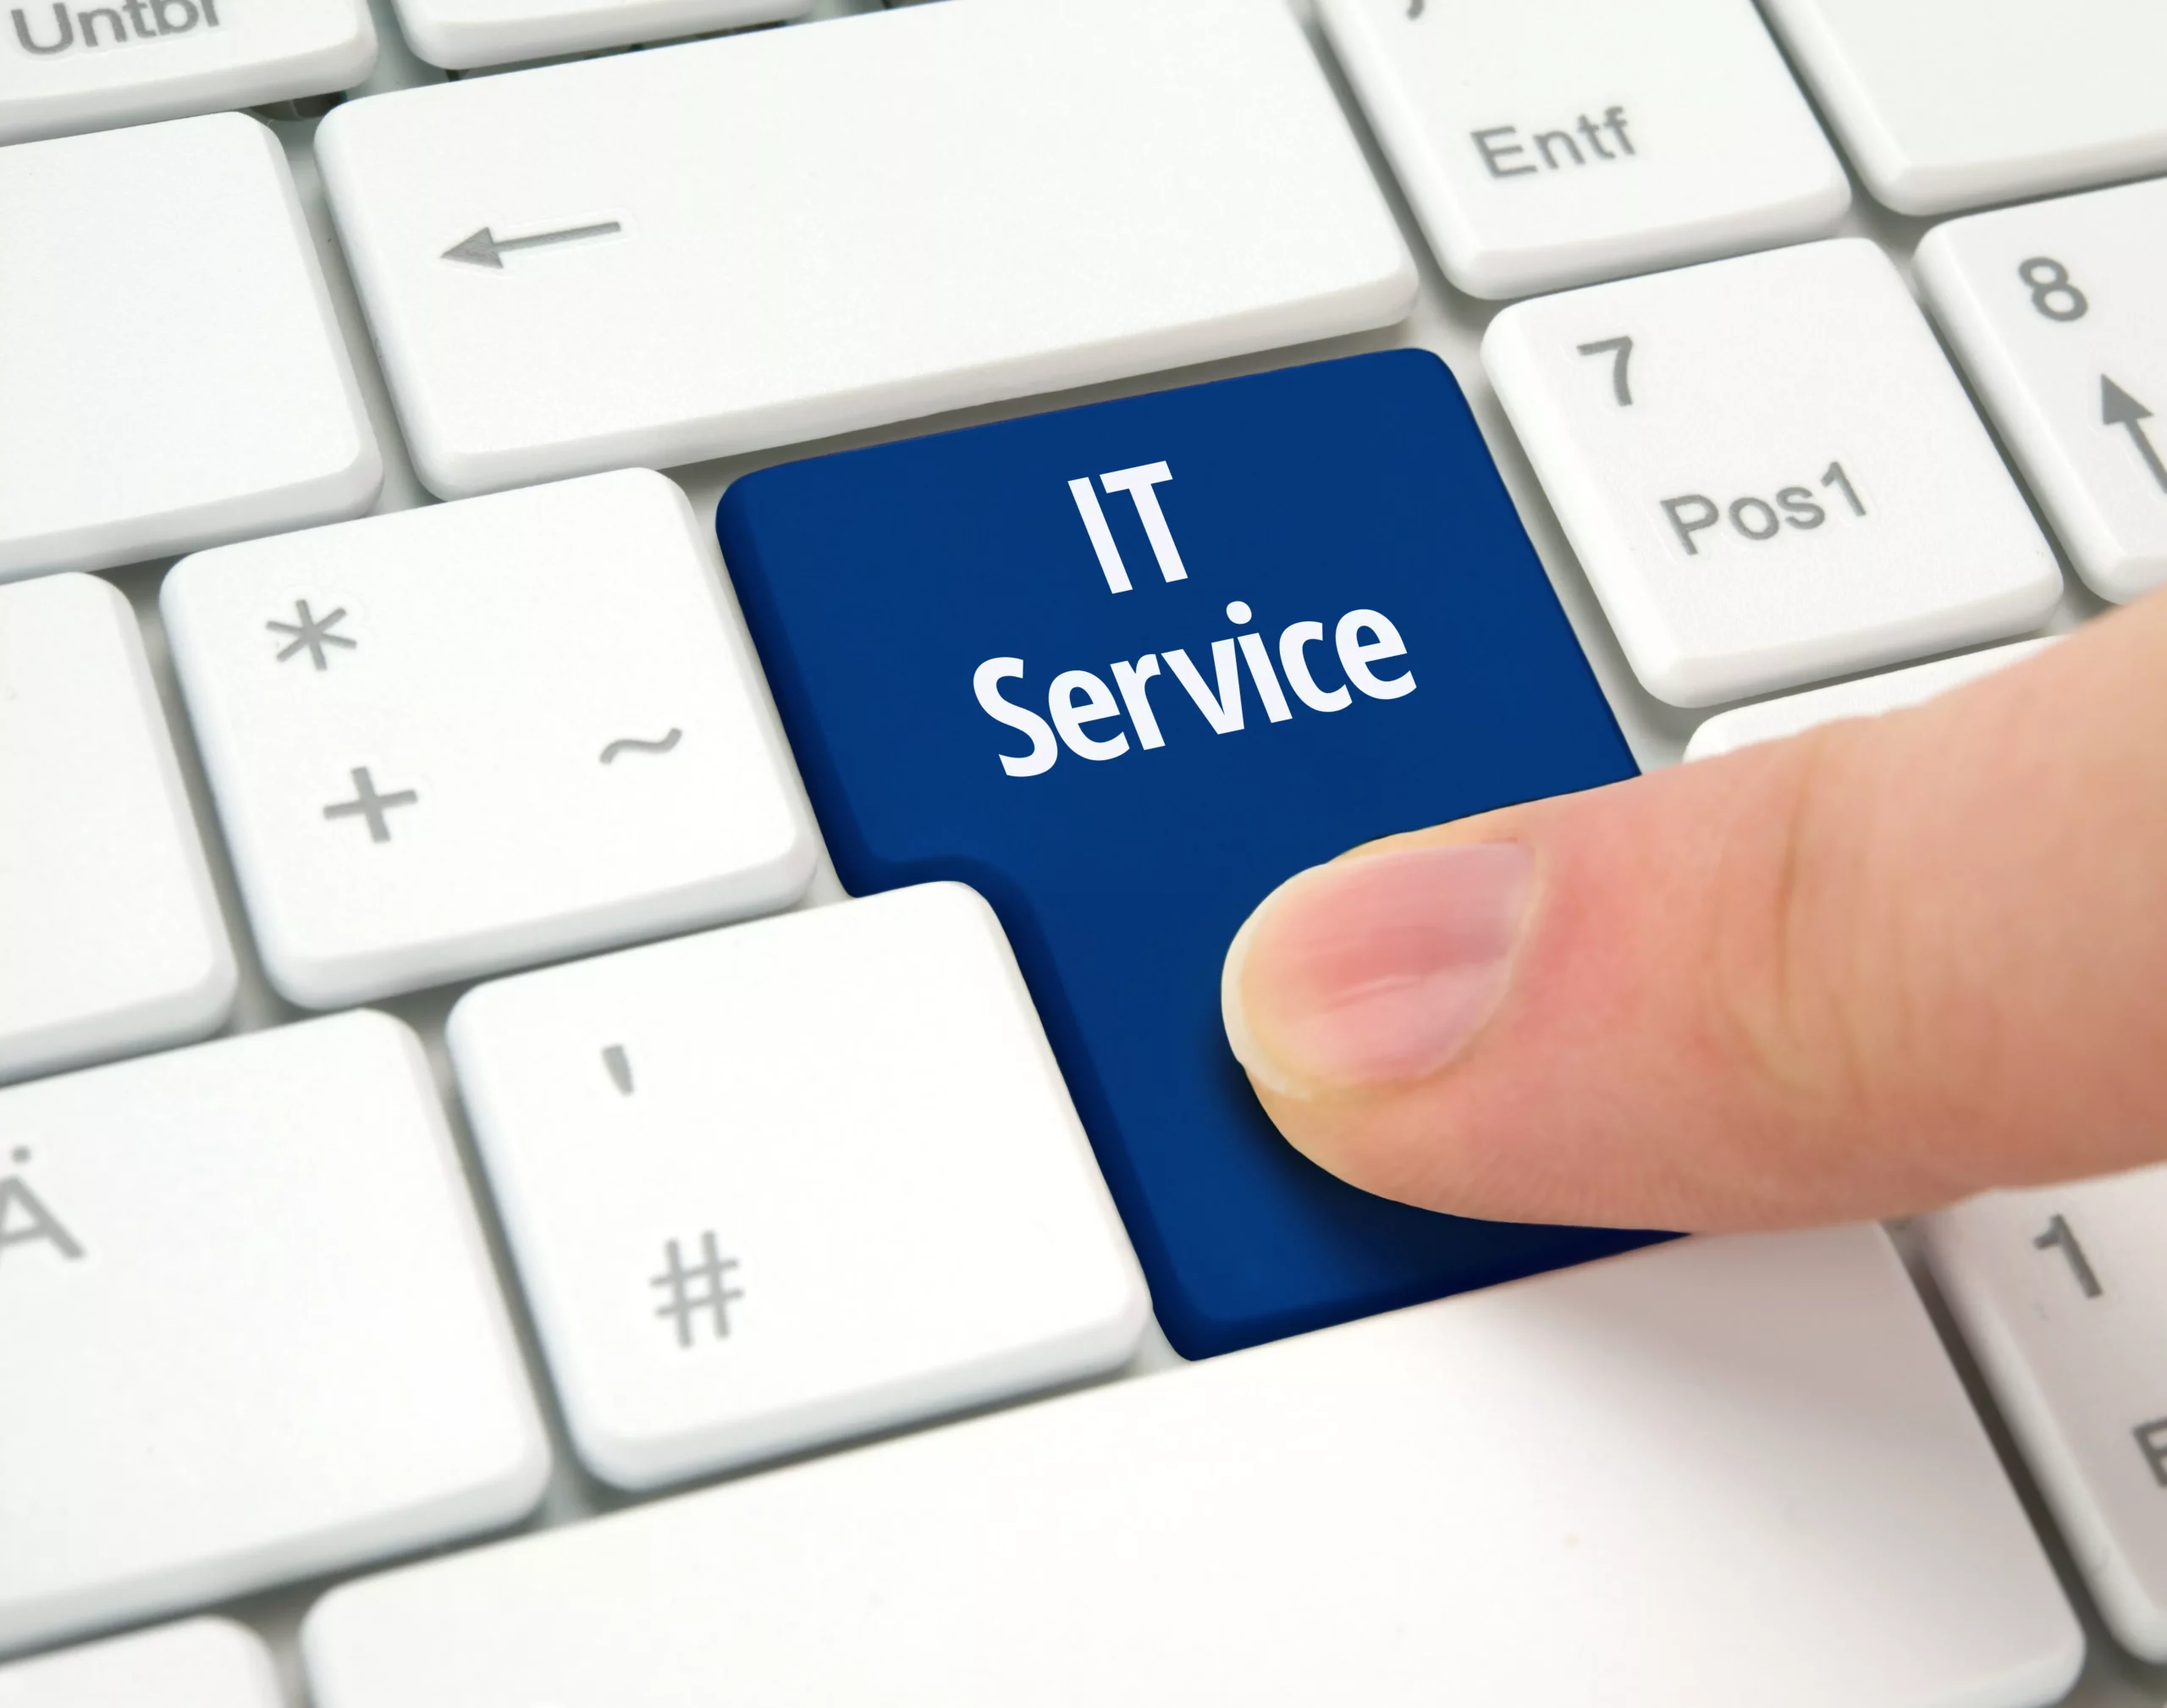 Teclado con tecla en azul que dice IT Service, servicio de TI según ITIL